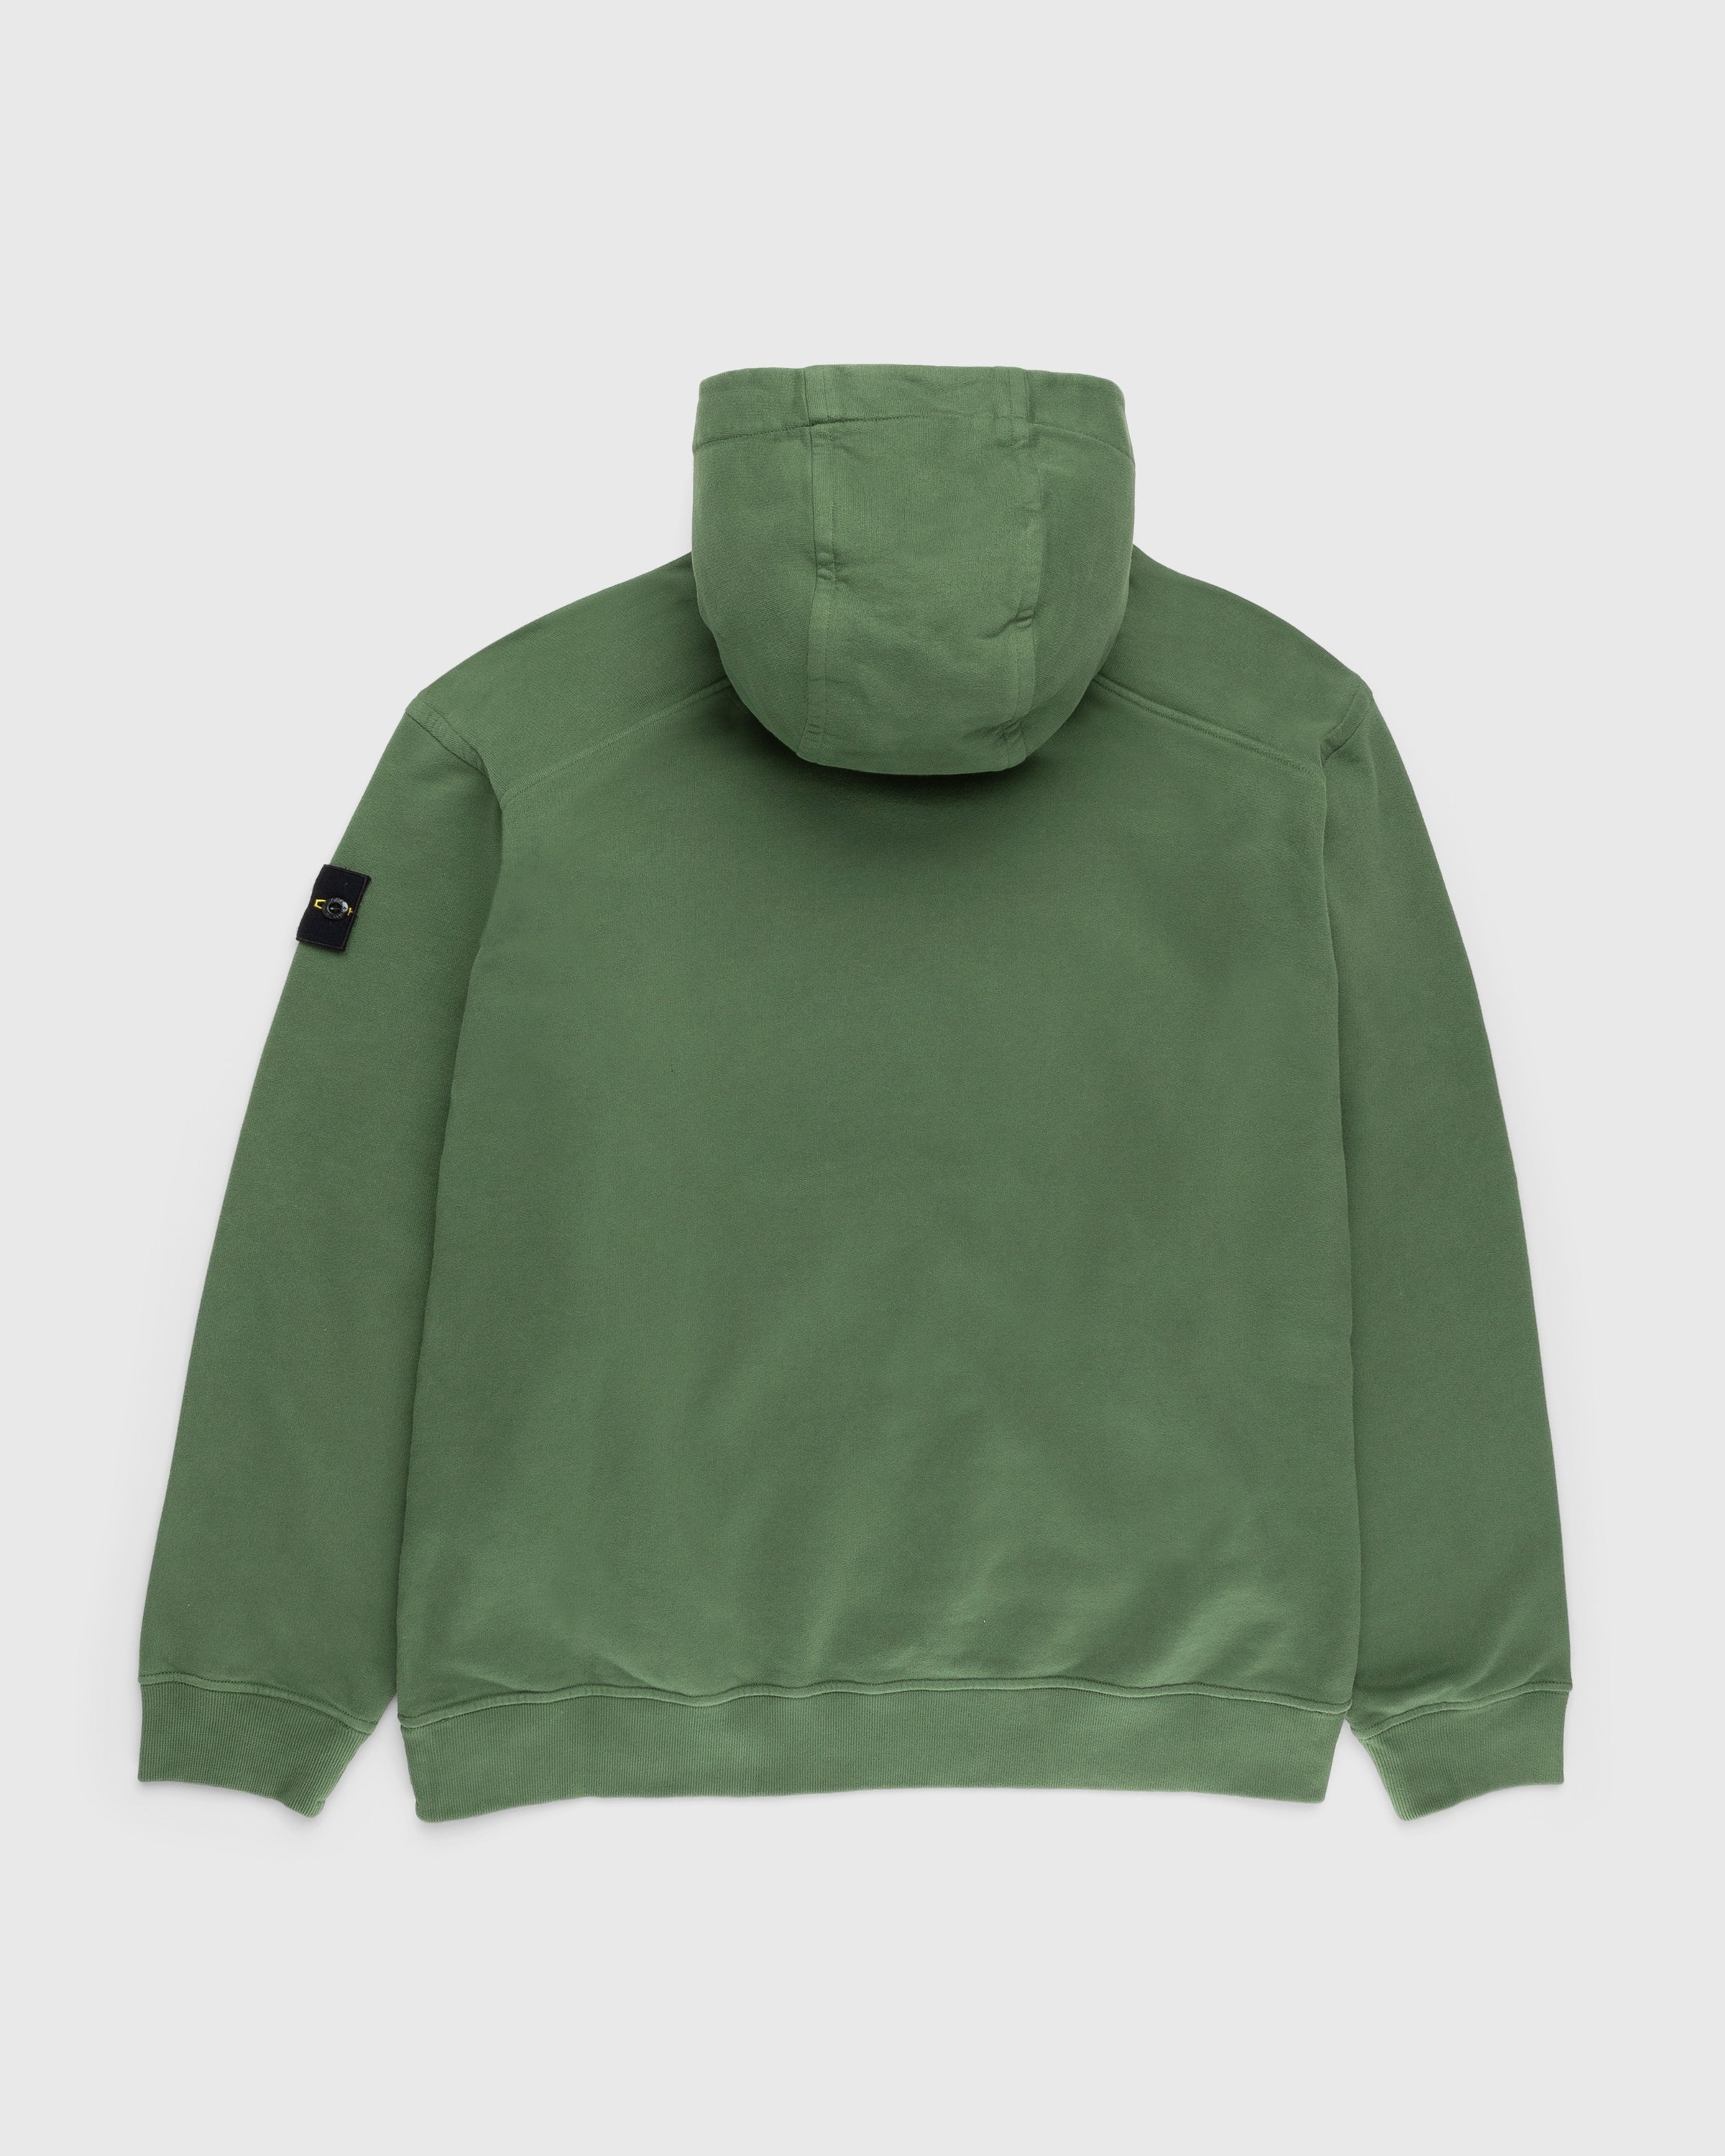 Stone Island – Garment-Dyed Fleece Hoodie Olive - Sweats - Green - Image 2